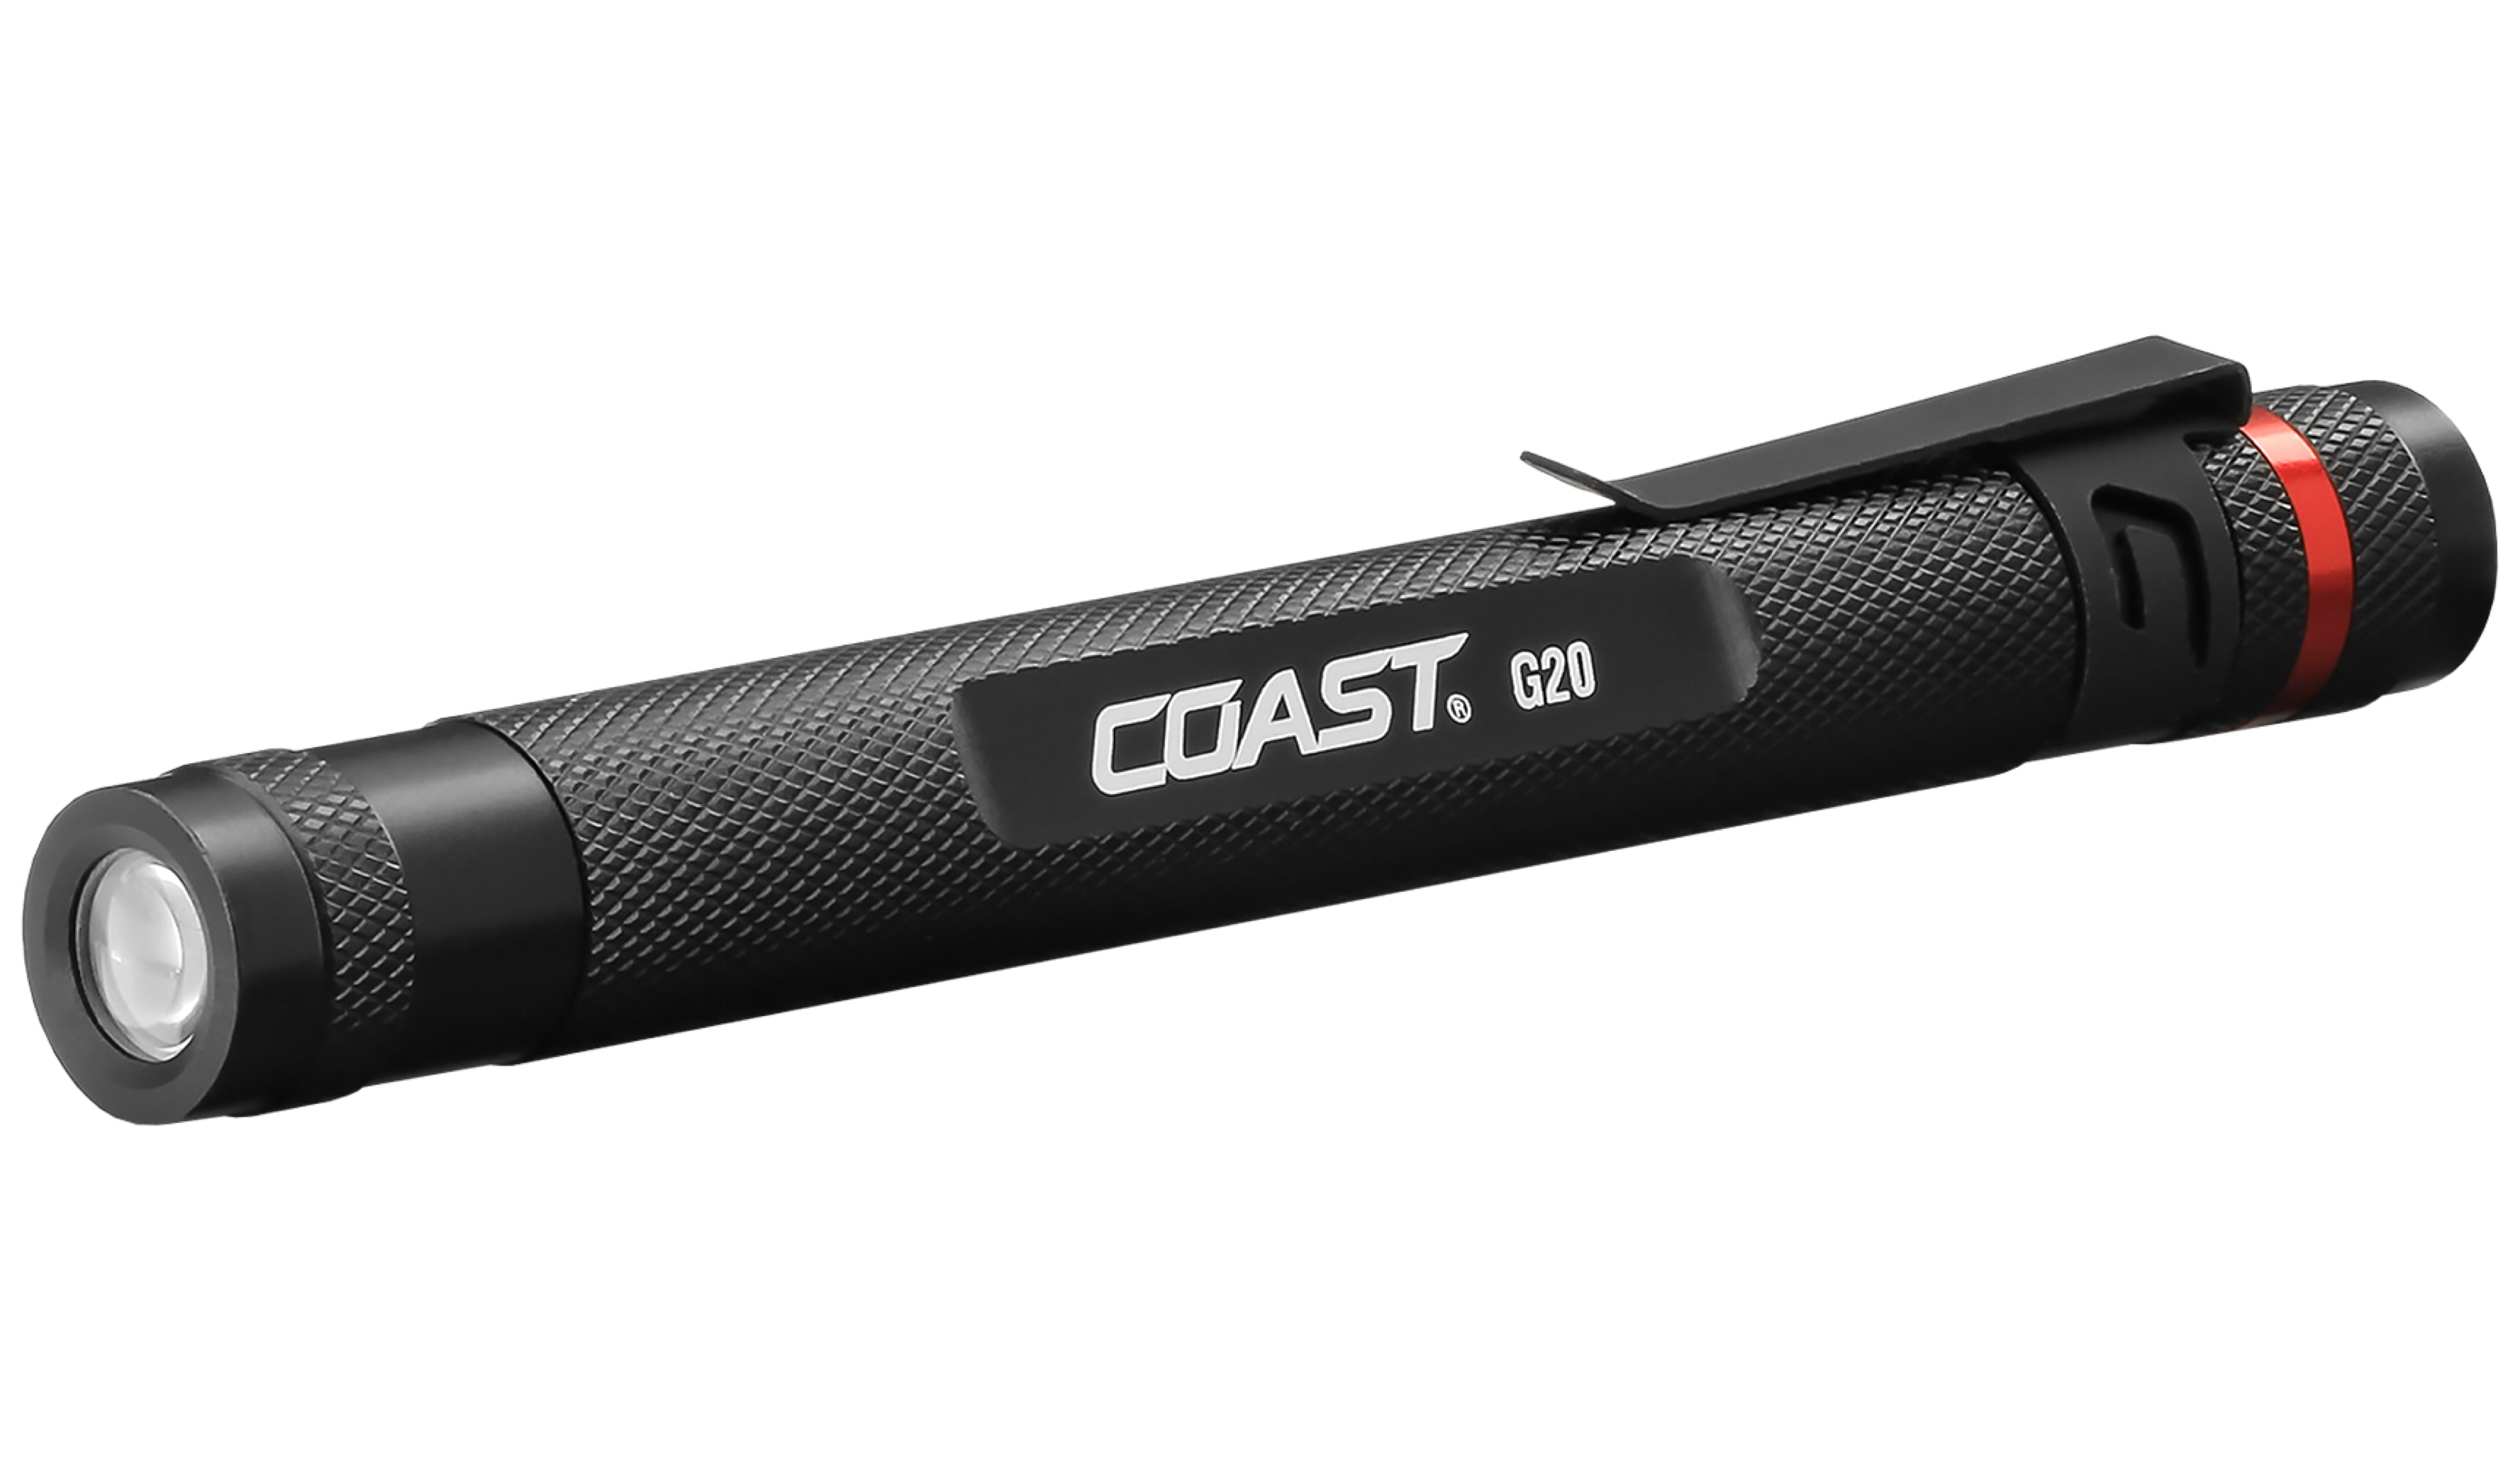 COAST G20 Dual Power 120 Lumen Inspection Beam LED Penlight, 4.2 oz - image 1 of 5